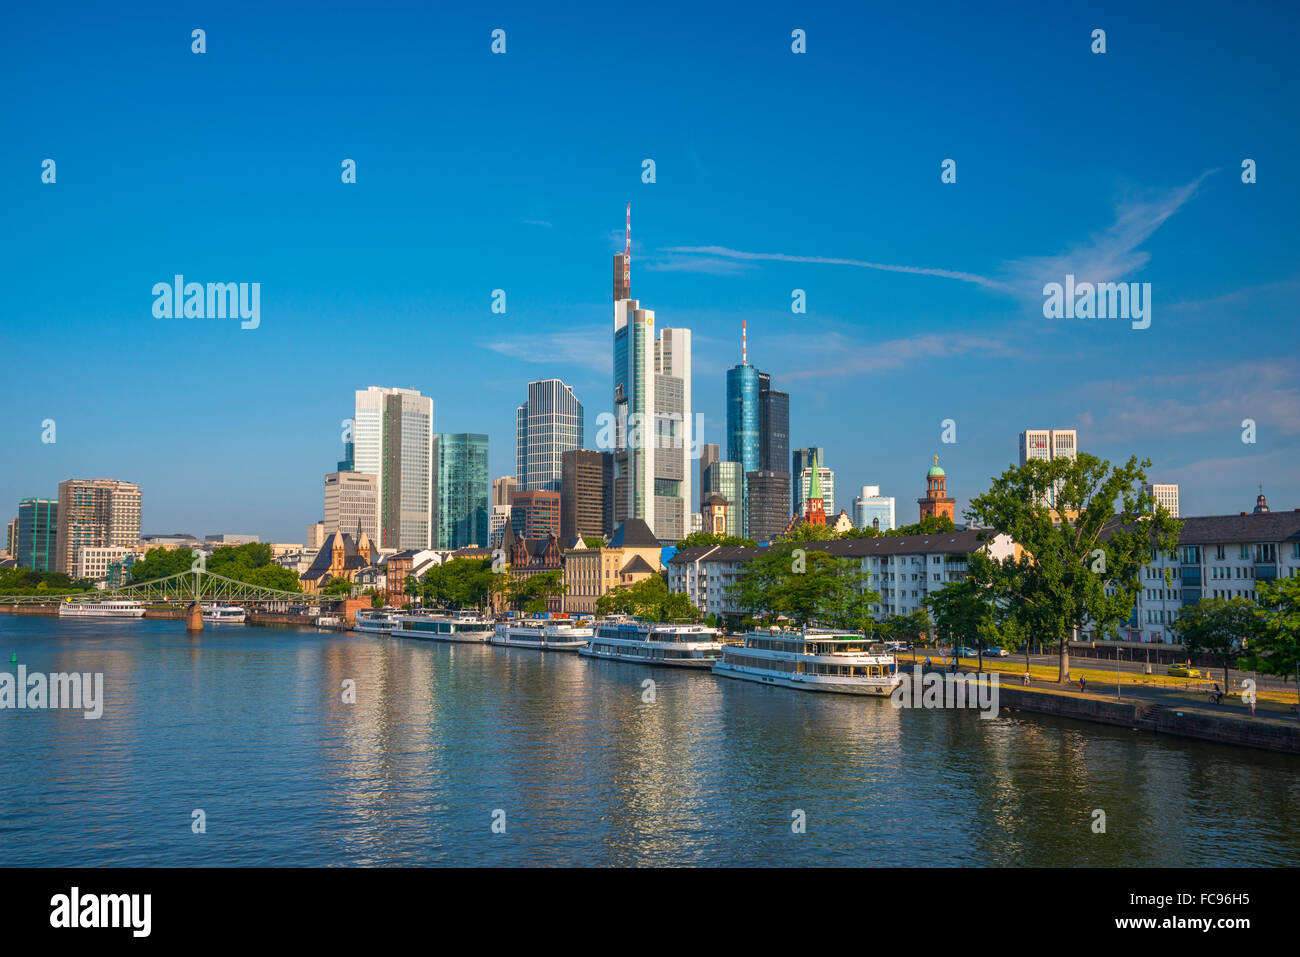 City skyline across River Main, Frankfurt am Main, Hesse, Germany, Europe Stock Photo